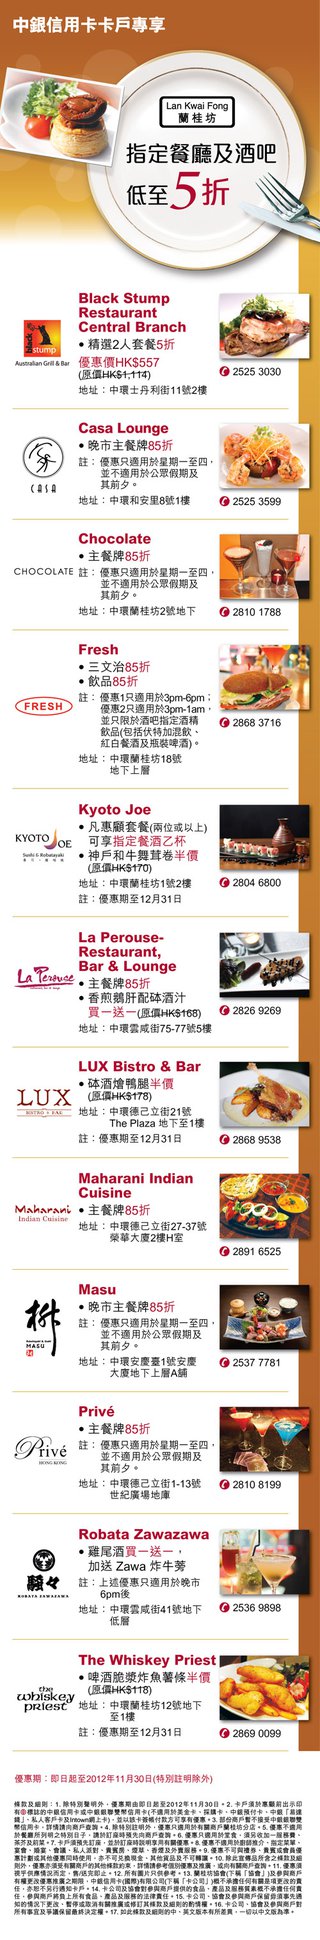 蘭桂坊指定餐廳及酒吧優惠延長 - LUX Bistro & bar